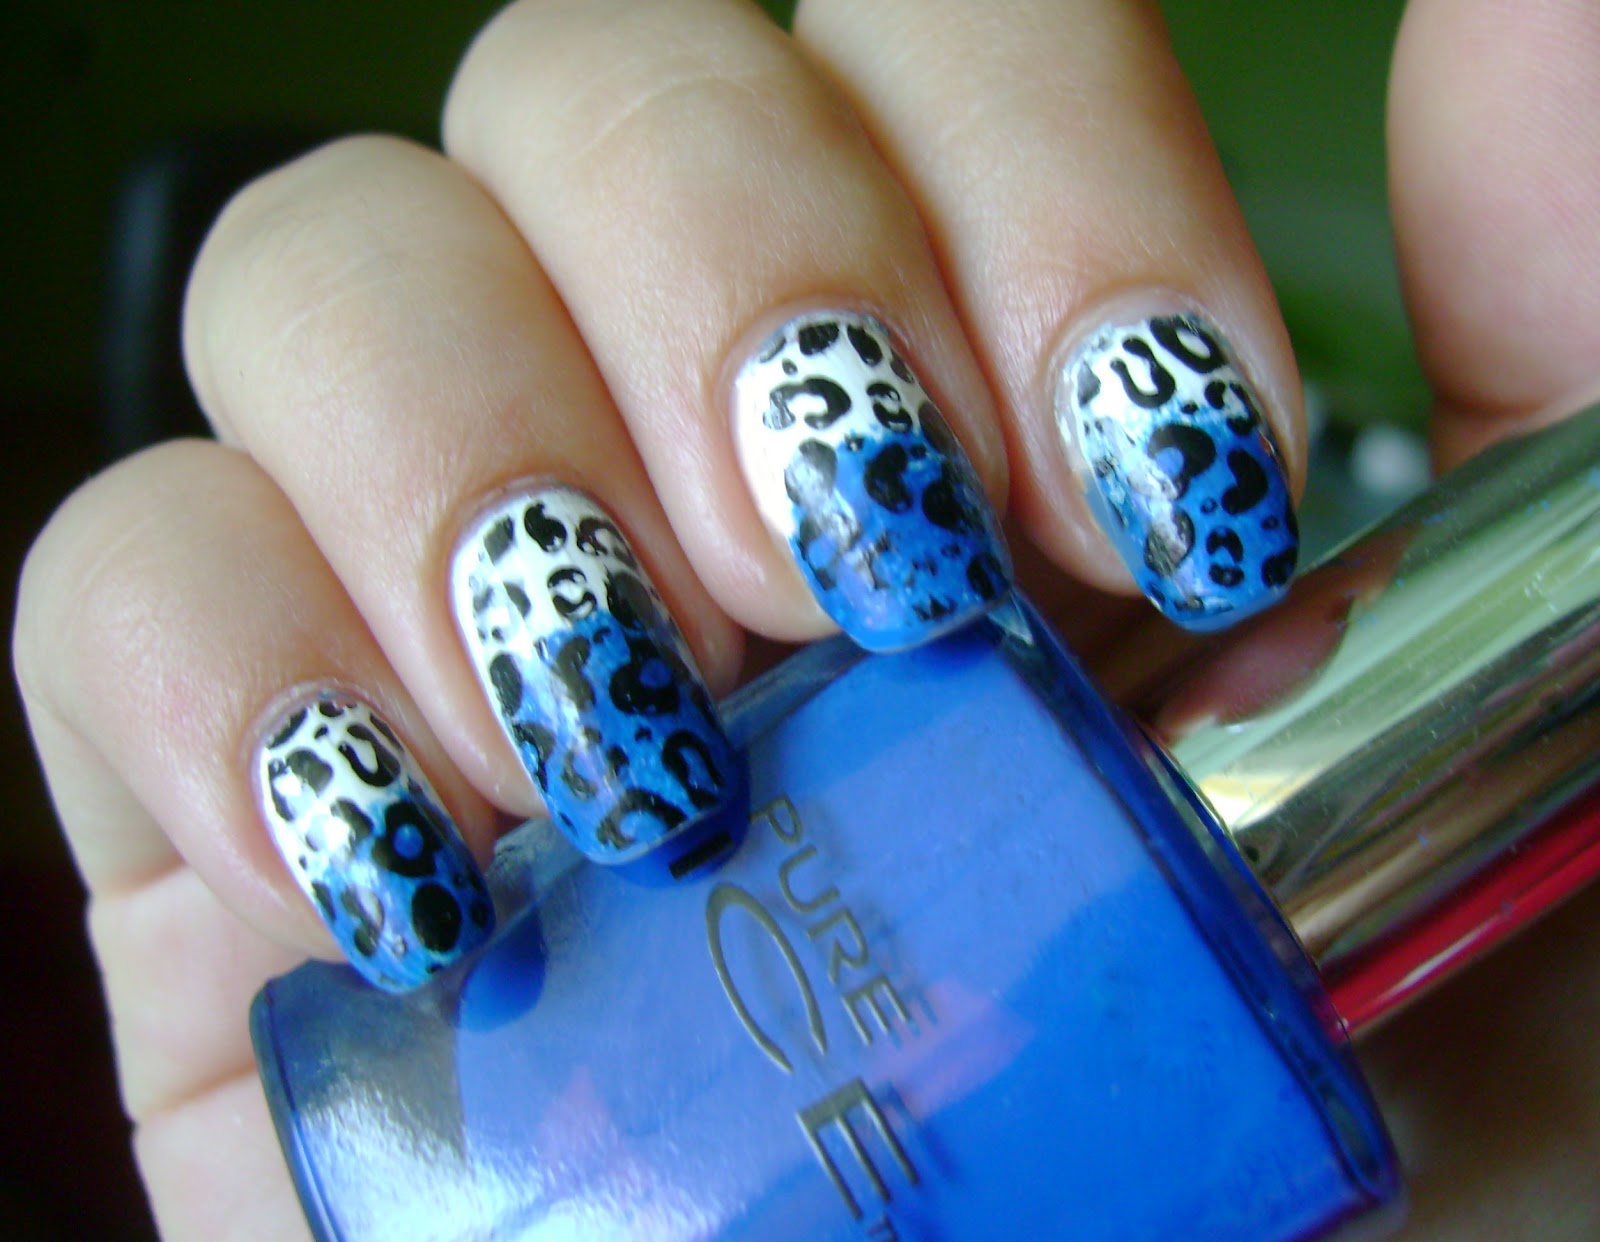 Konad Addict: Blue leopard nails